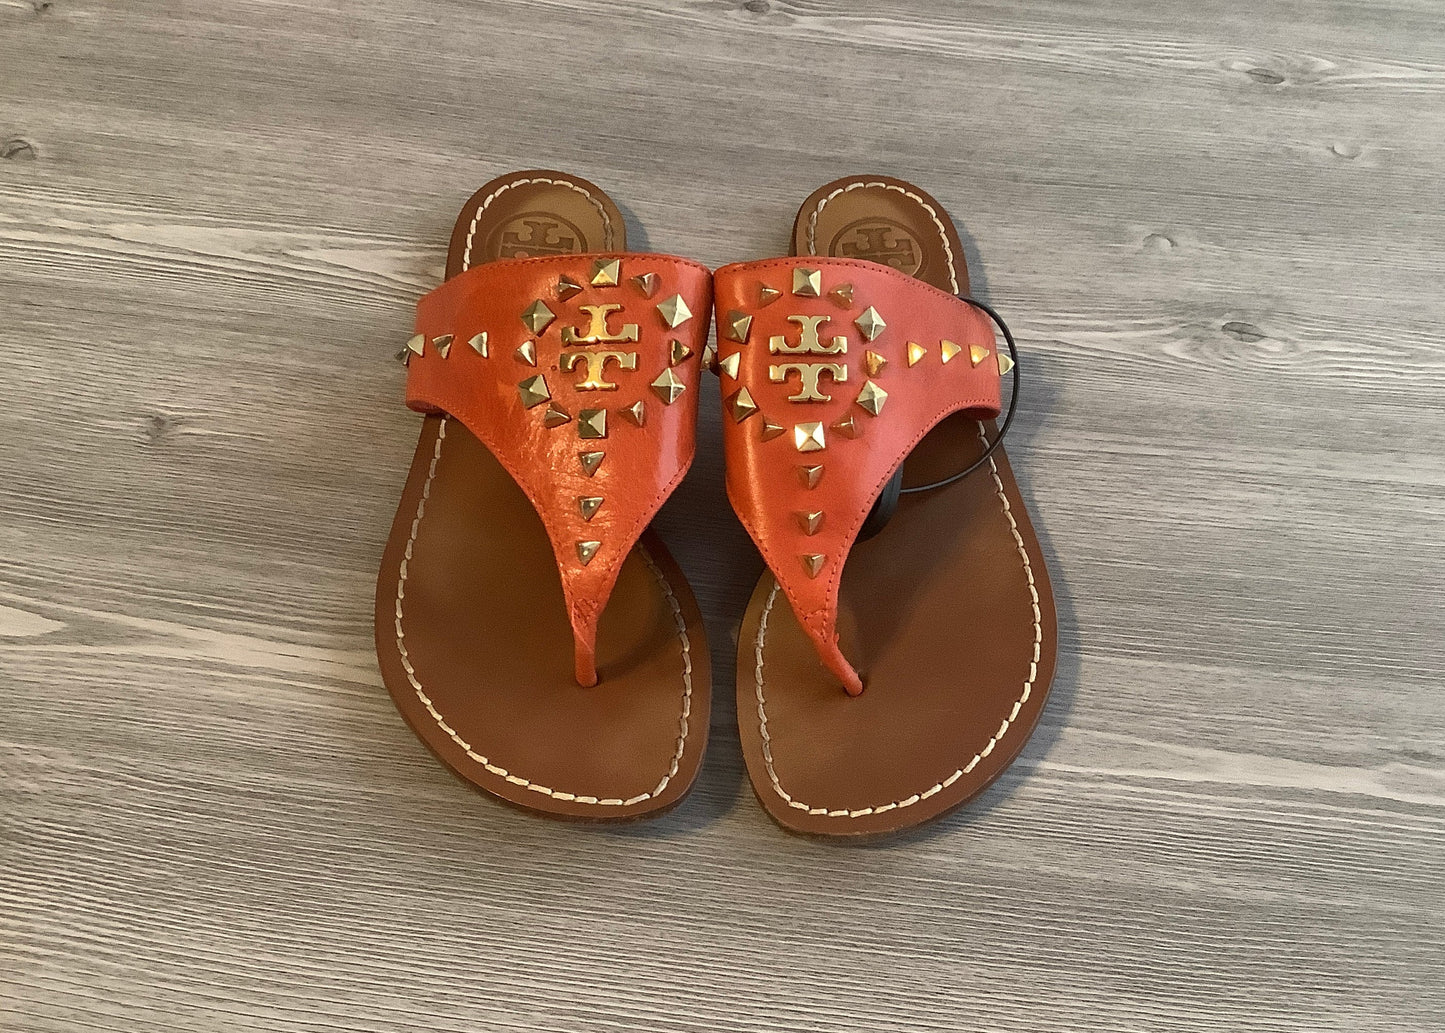 Orange Sandals Flip Flops Tory Burch, Size 6